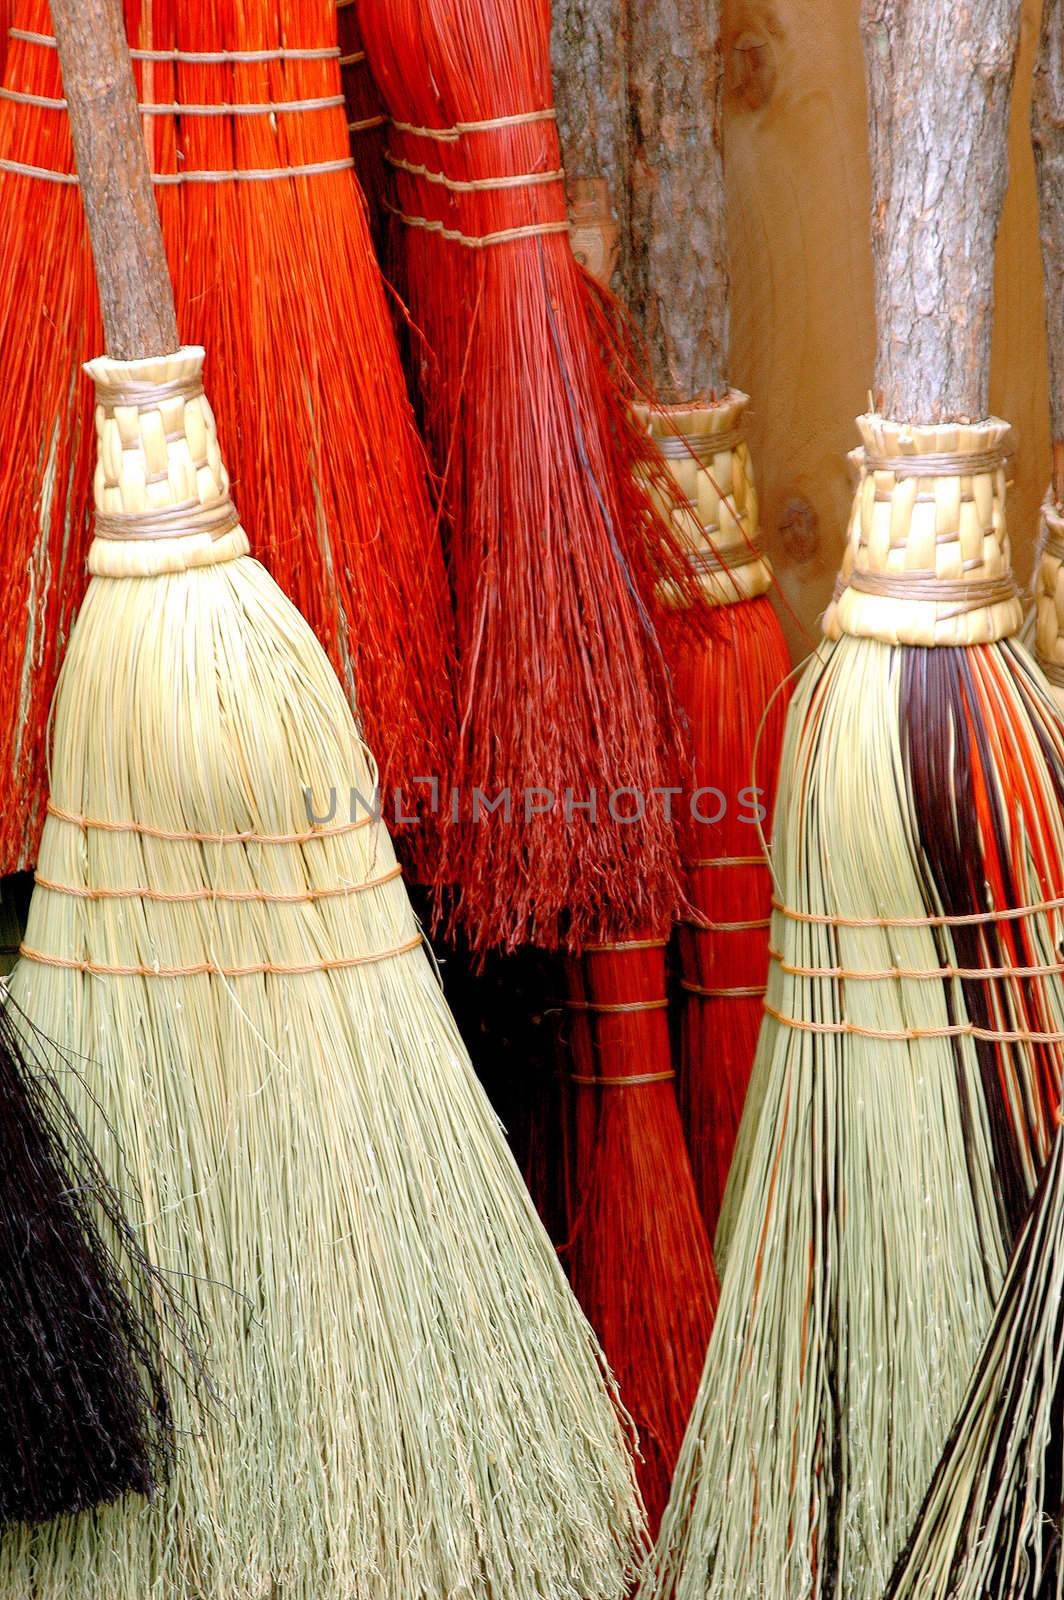 Colorful brooms on display indoors.